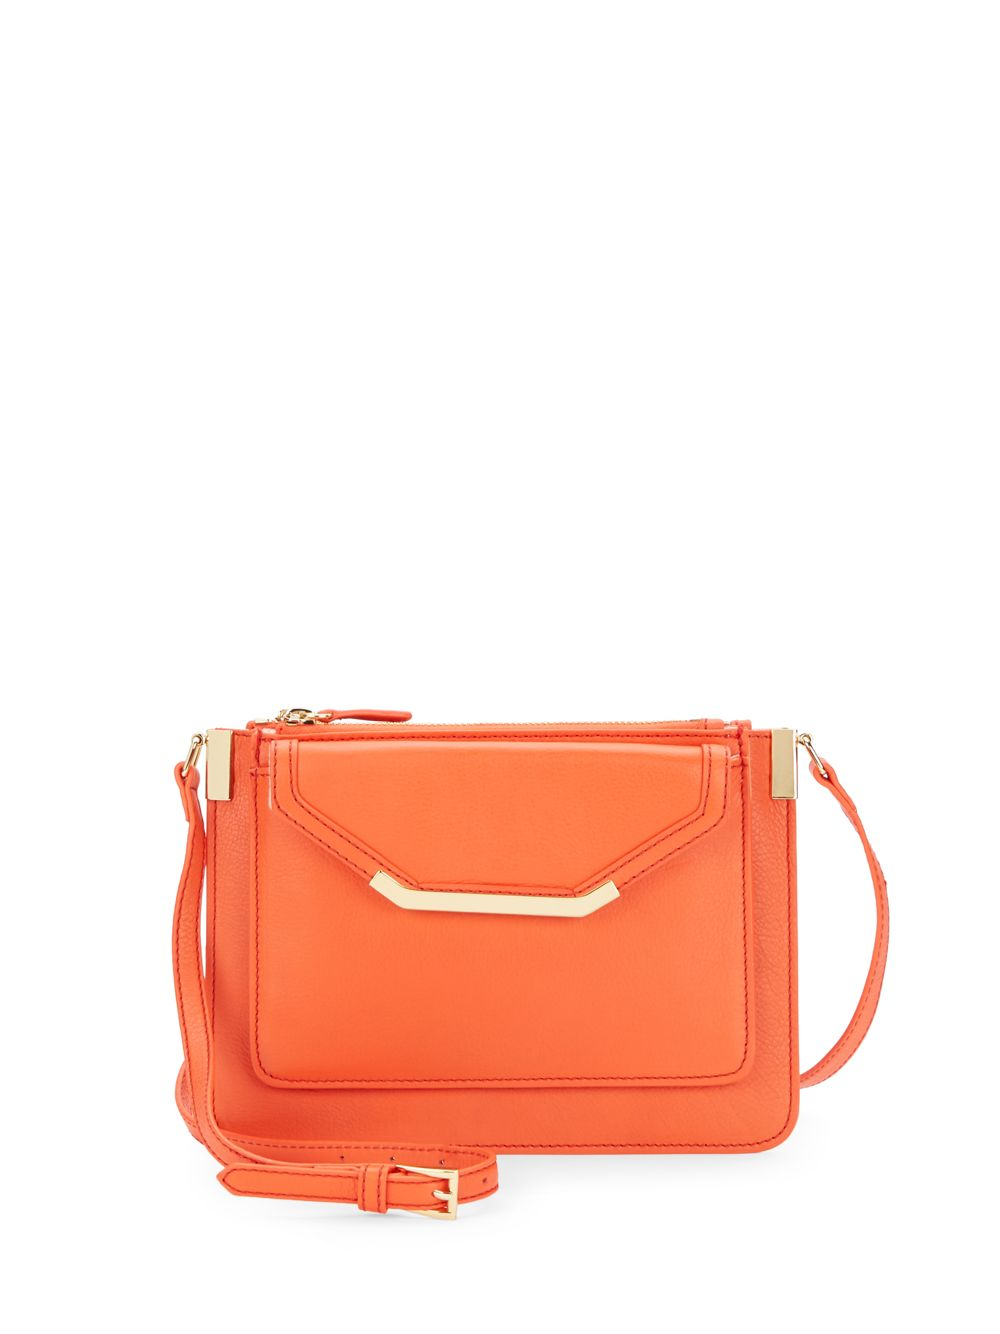 Saks Fifth Avenue Black Label Vivi Leather Crossbody Bag in Orange (coral) | Lyst